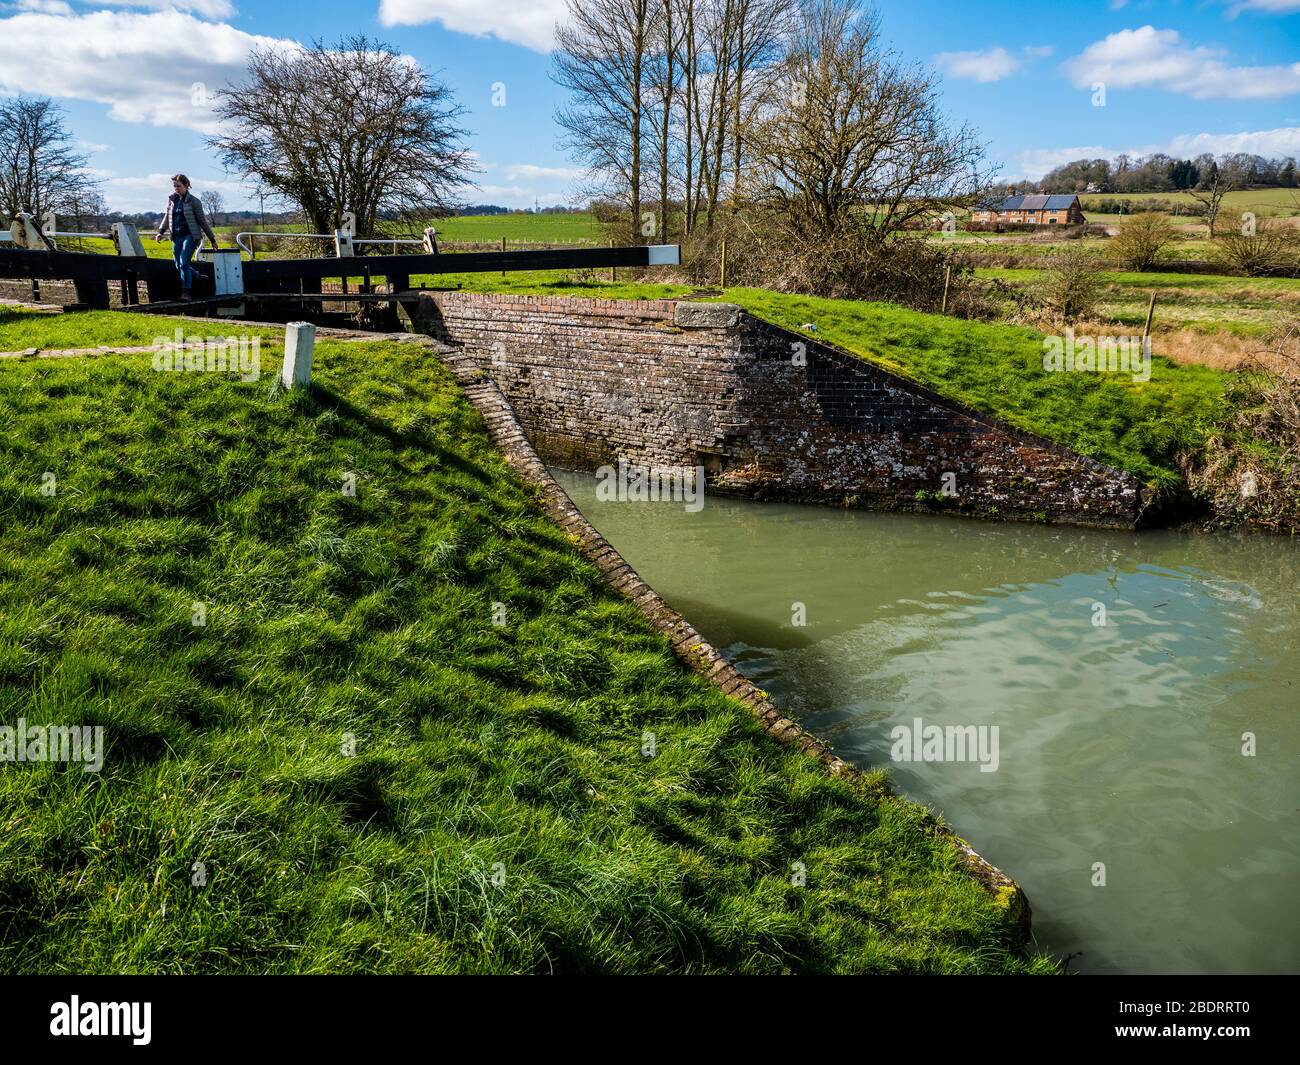 Frau mit Canal Lock, Kennet und Avon Canal, Potters Lock, Great Bedwyn, Wiltshire, England, Großbritannien, GB. Stockfoto